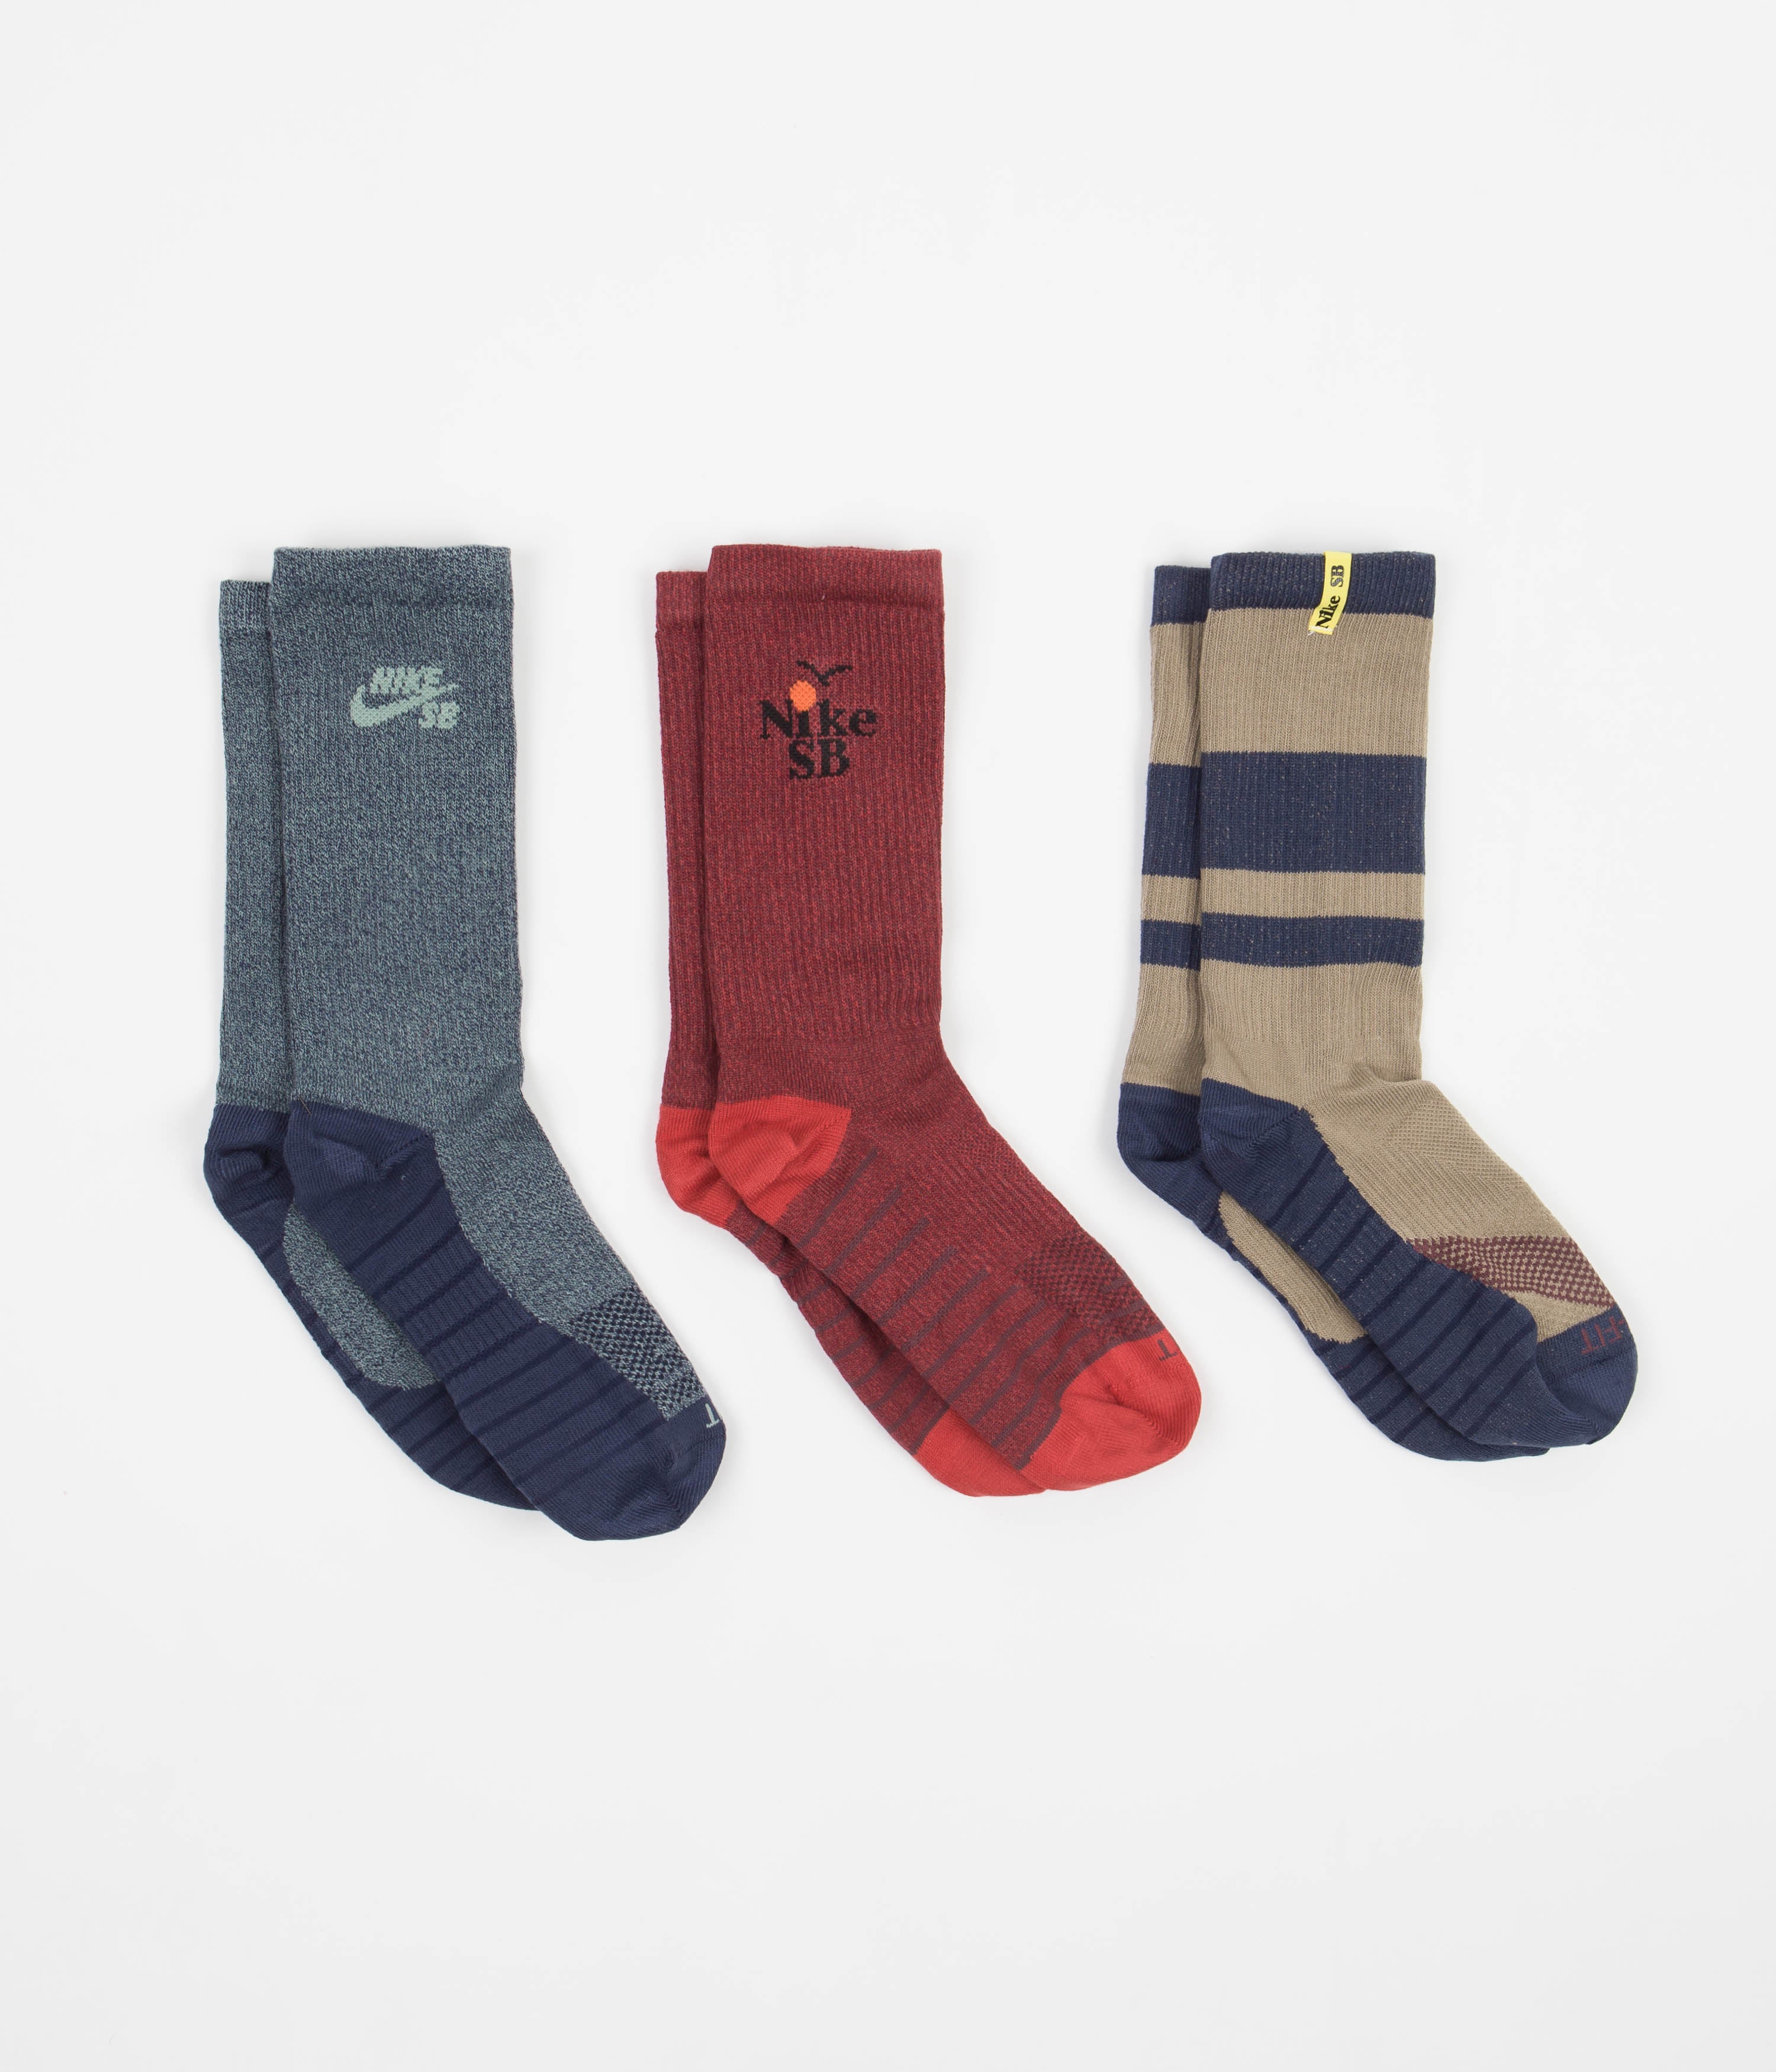 Barcelona Nike SB Everyday socks3 Pairs - ソックス